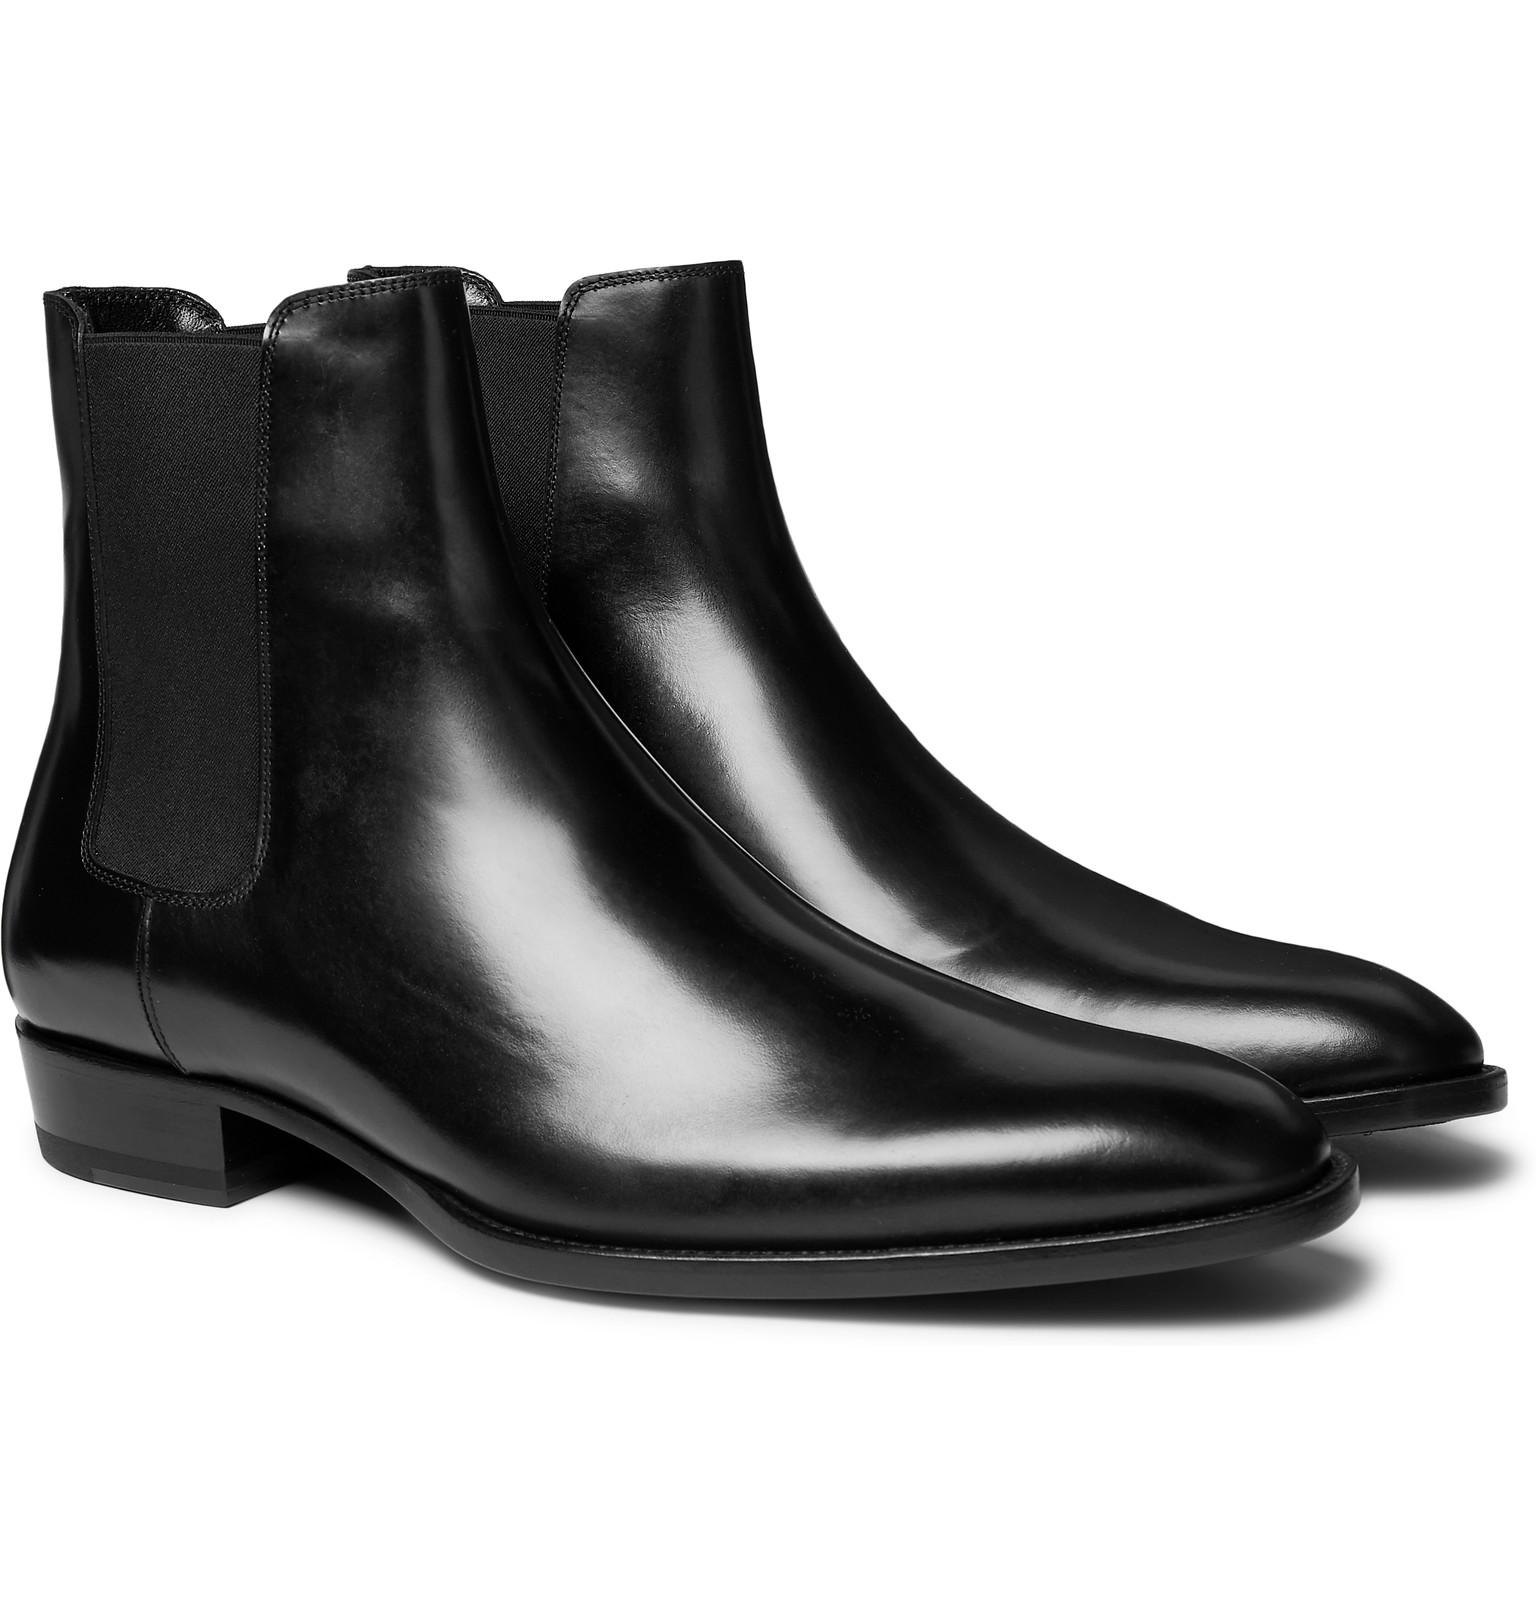 Saint Laurent Wyatt Leather Chelsea Boots in Black for Men - Lyst